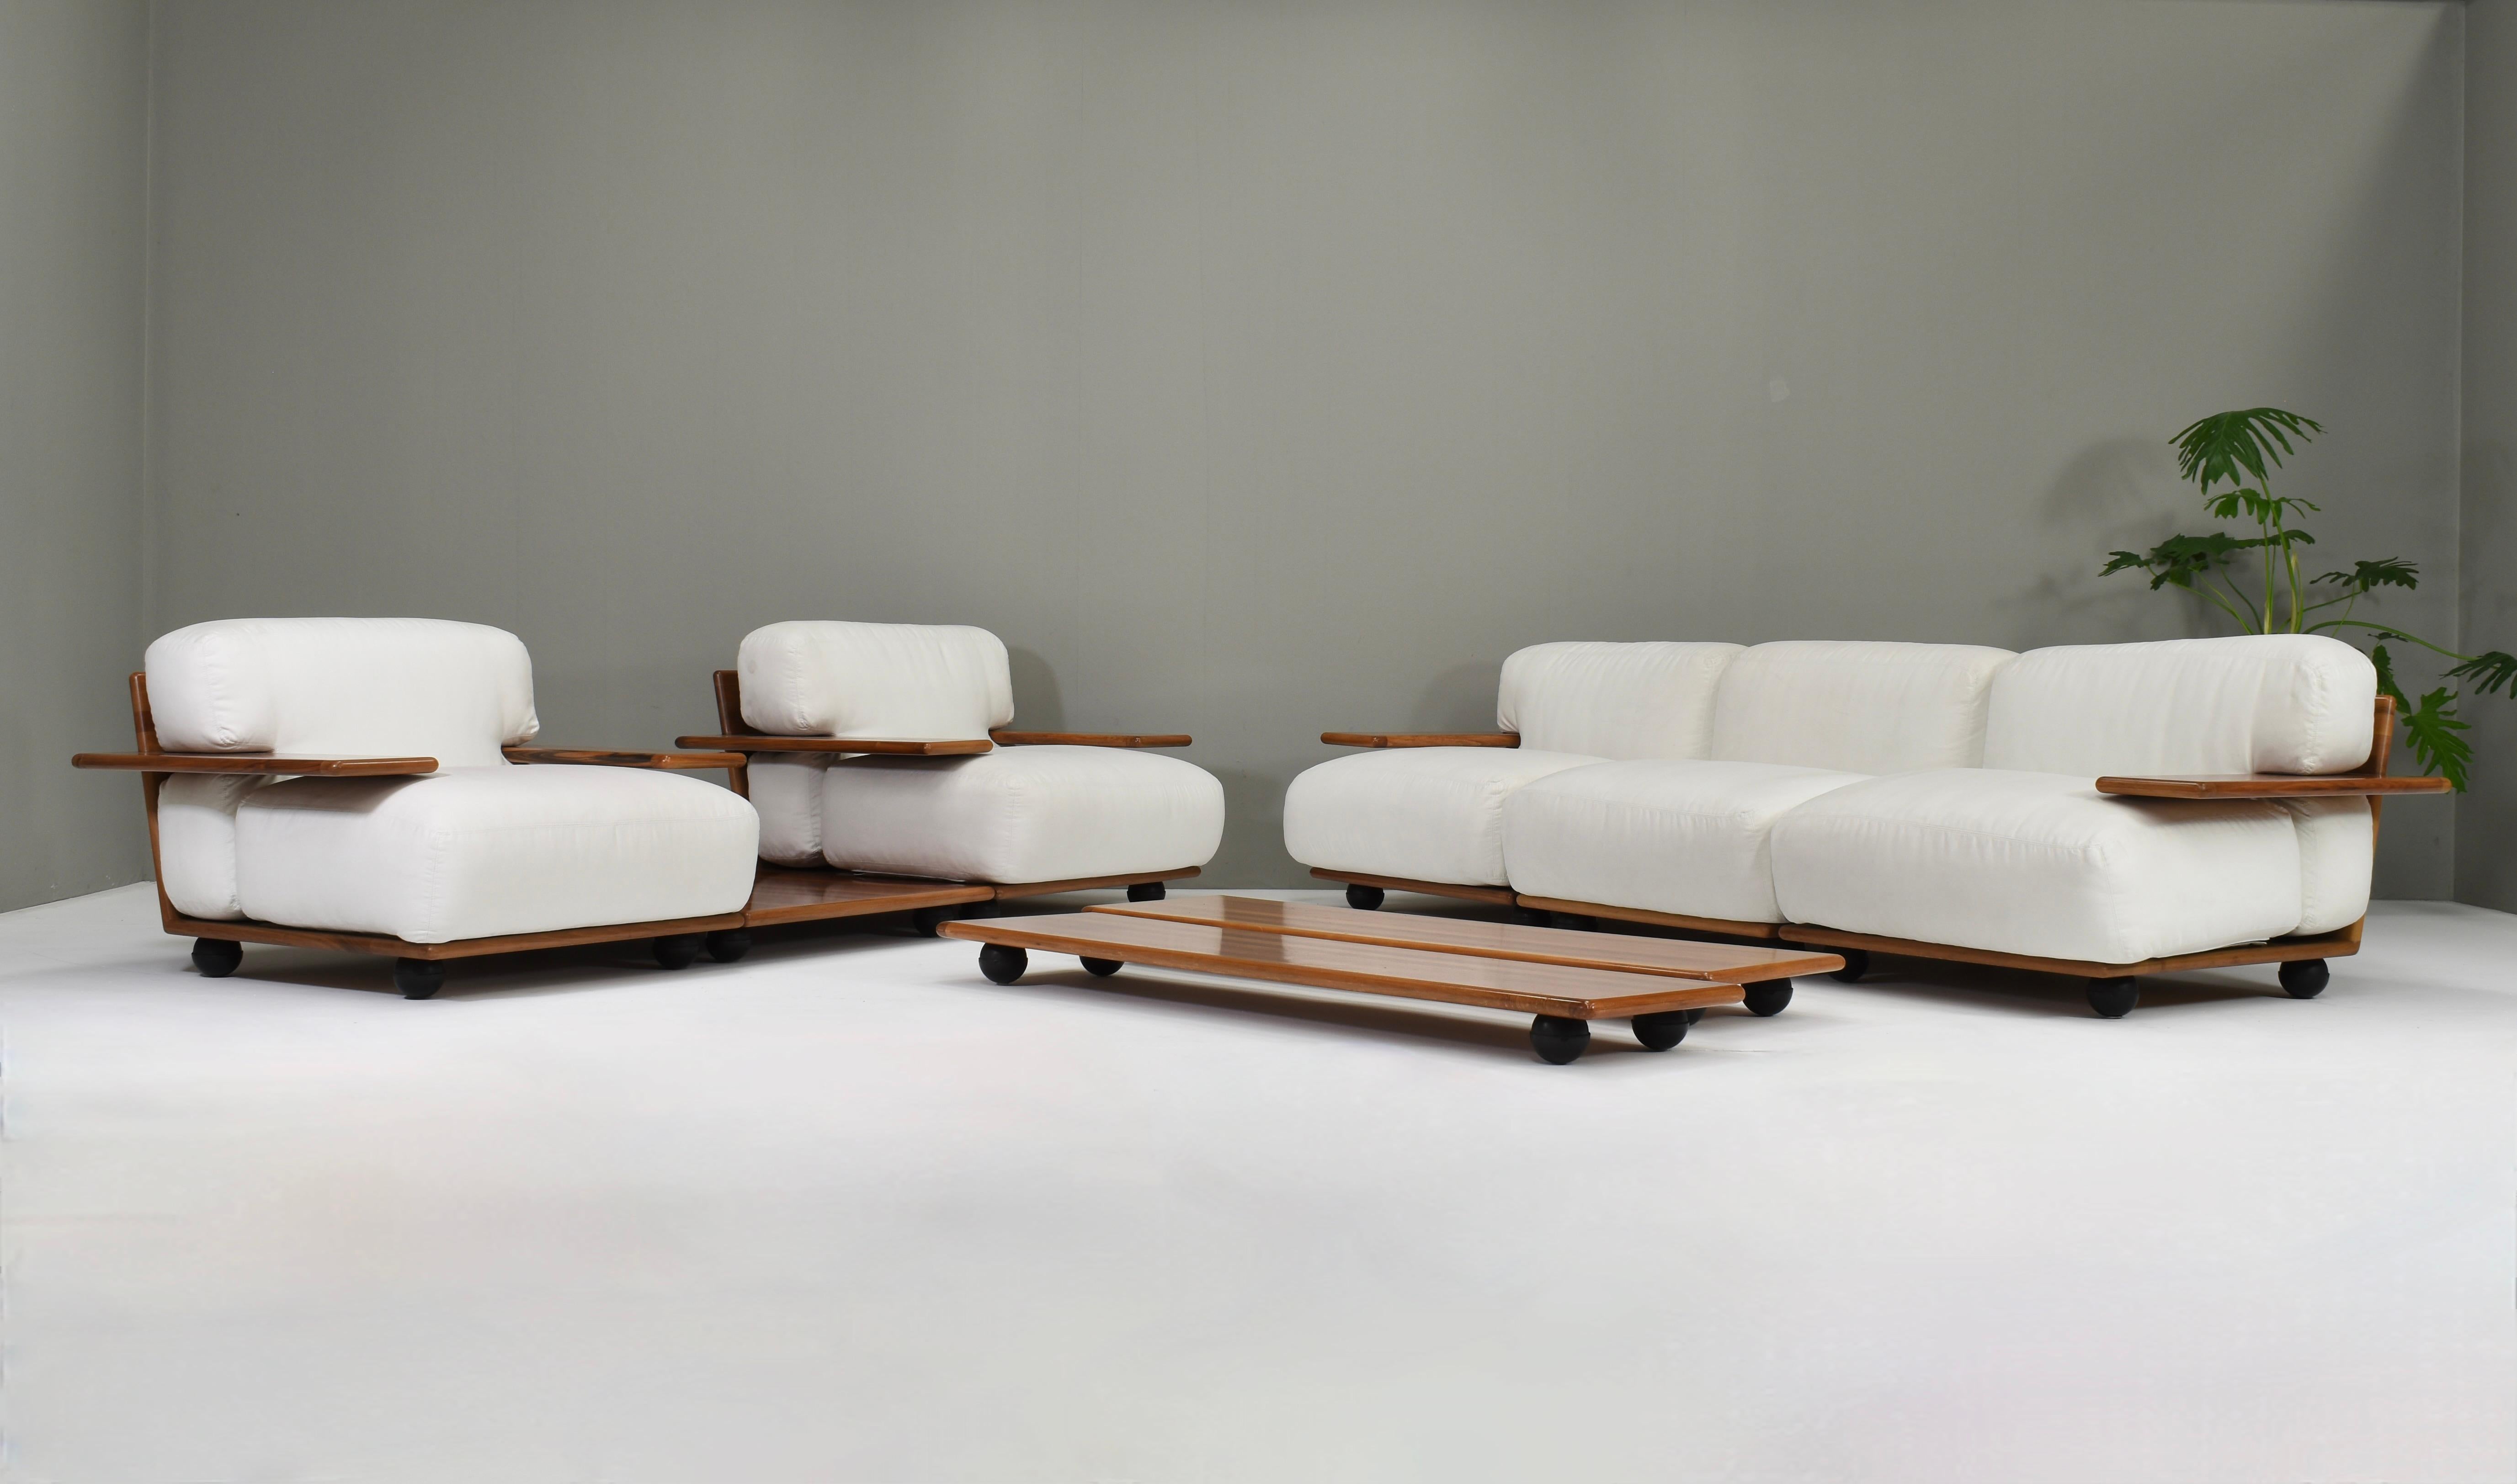 Late 20th Century Mario Bellini Rare model Pianura living room set by Cassina, Italy – 1971 For Sale